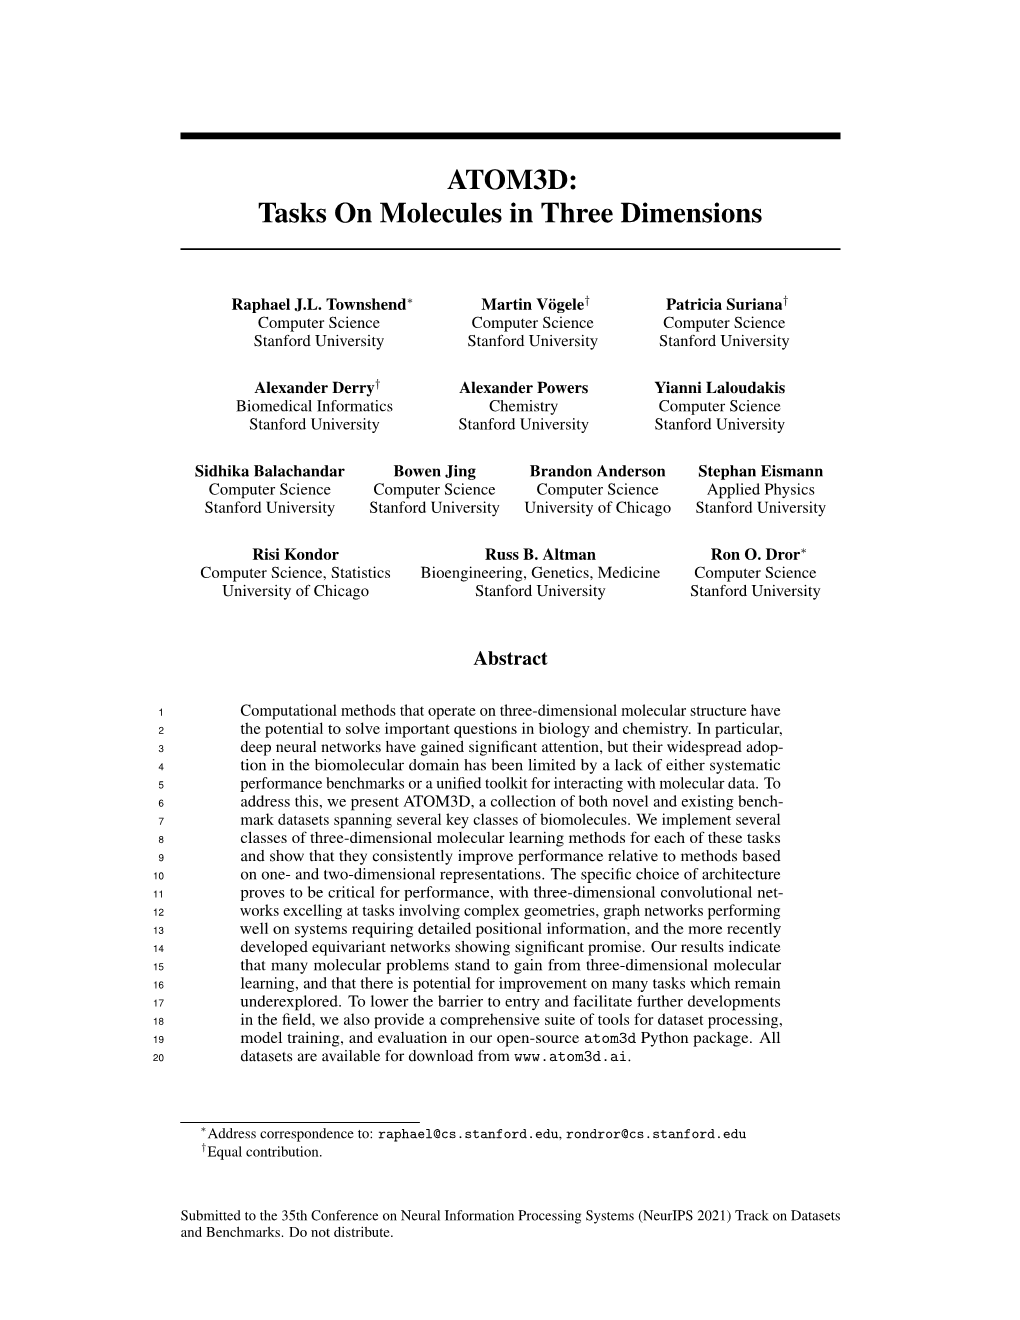 ATOM3D: Tasks on Molecules in Three Dimensions